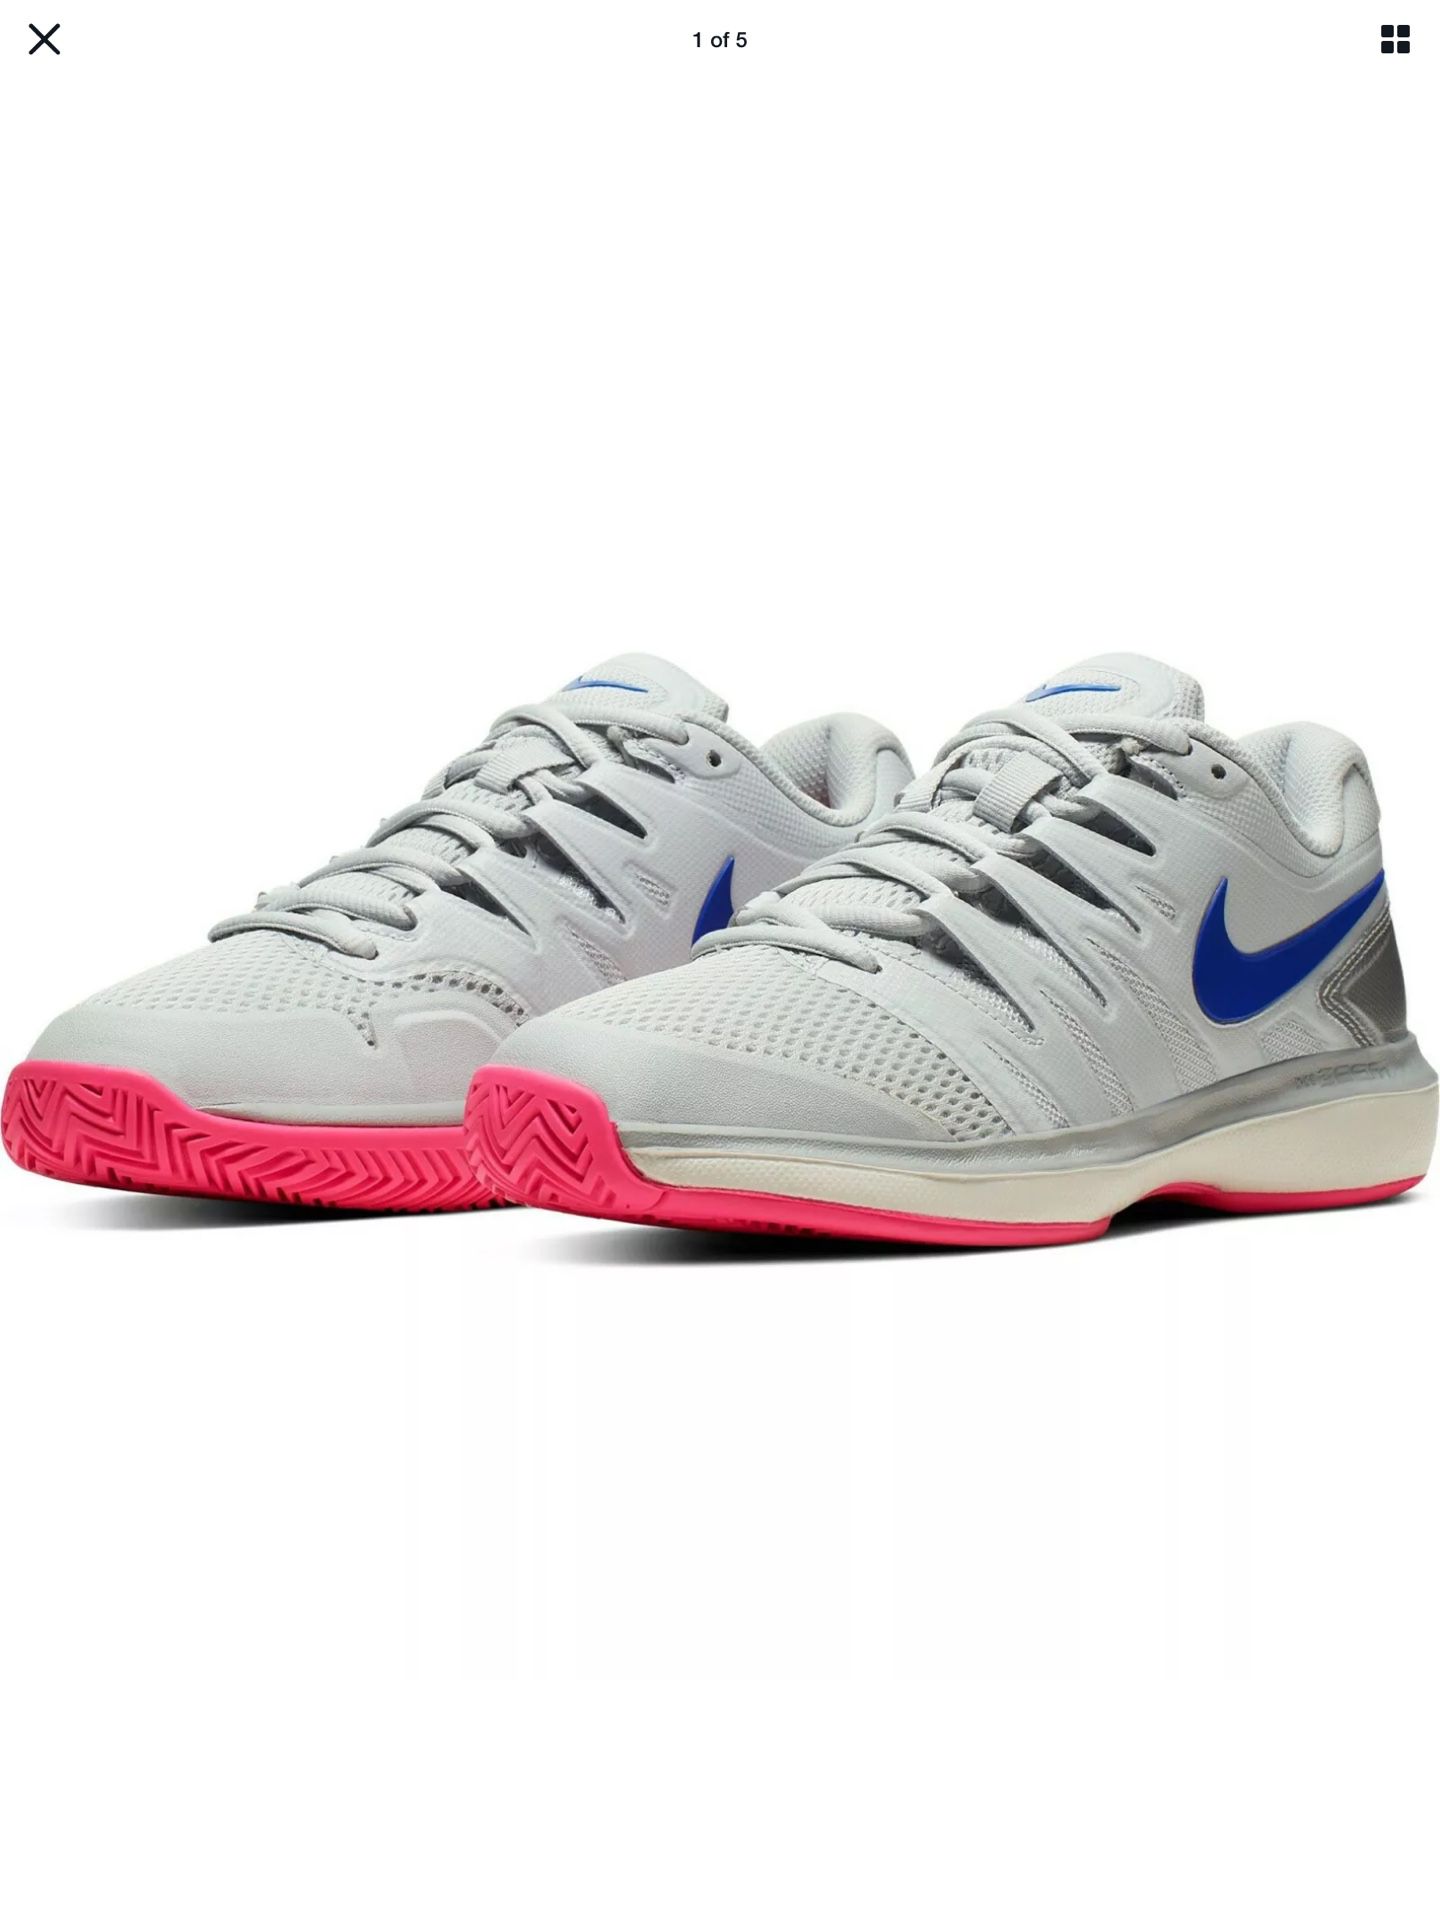 Nike Air Zoom Prestige HC Women's Size 10 men’s 8.5 Tennis Shoes Pure Platinum AA8024-004